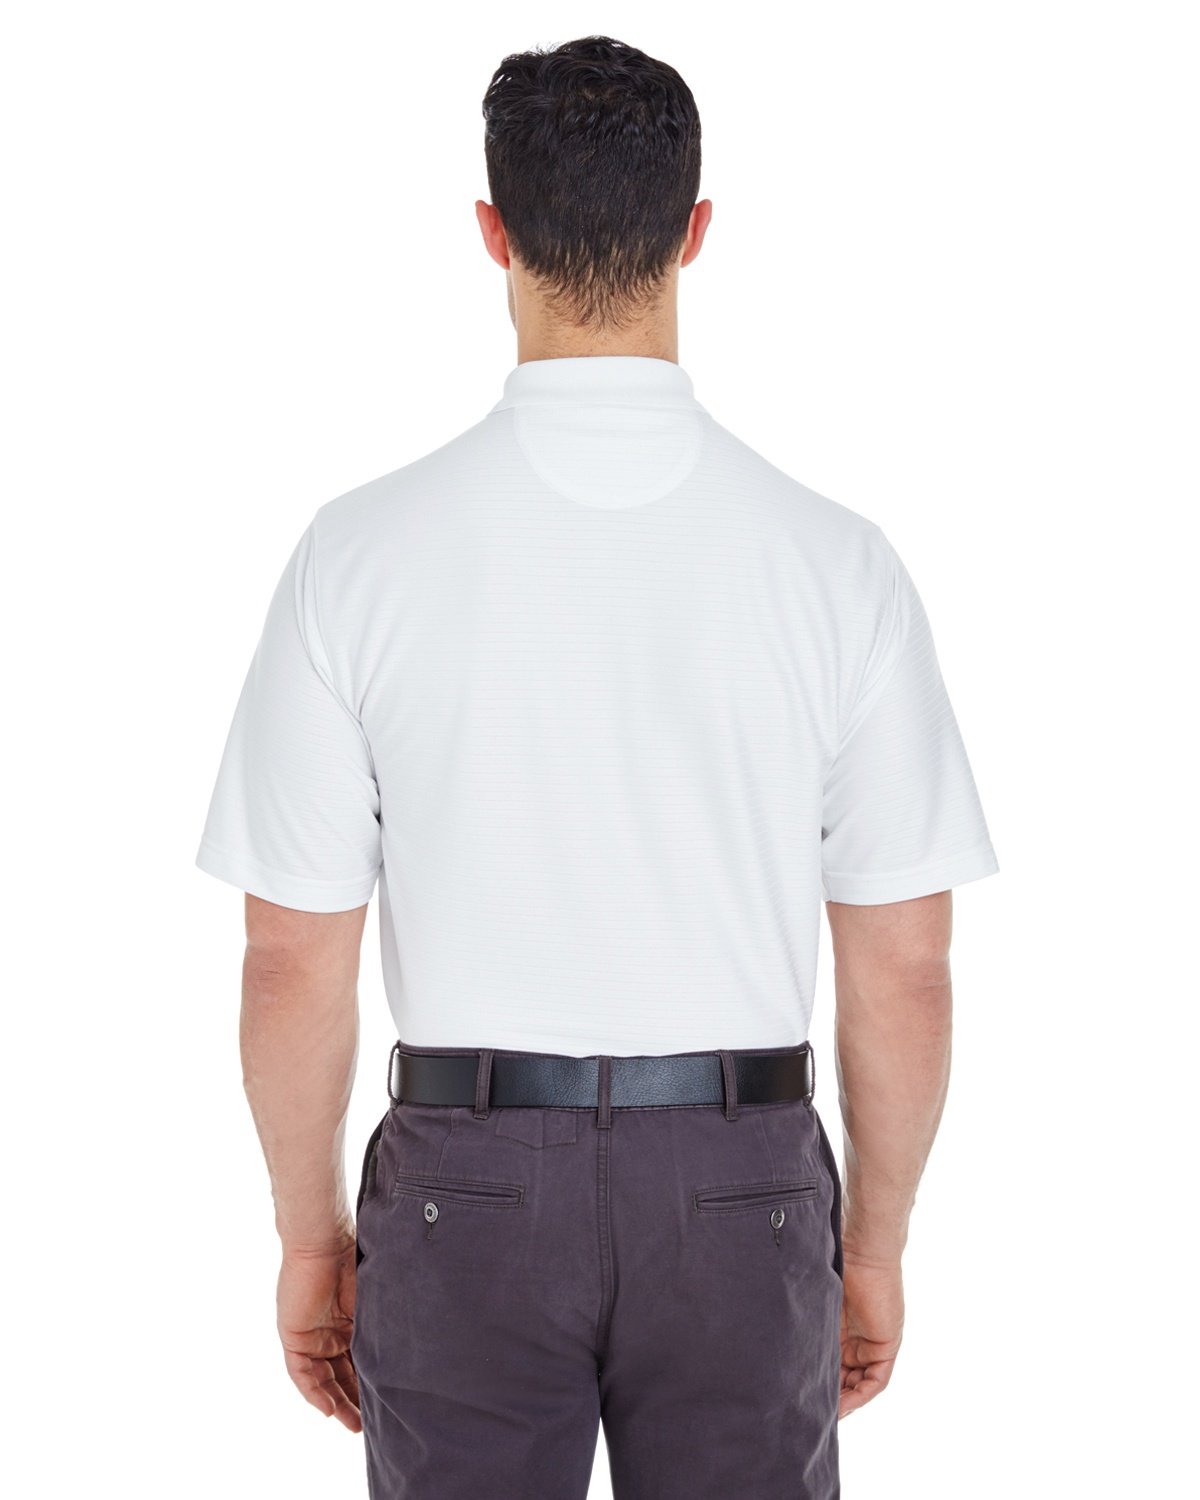 'UltraClub 8413 Men's Cool & Dry Elite Tonal Stripe Performance Polo Shirt'